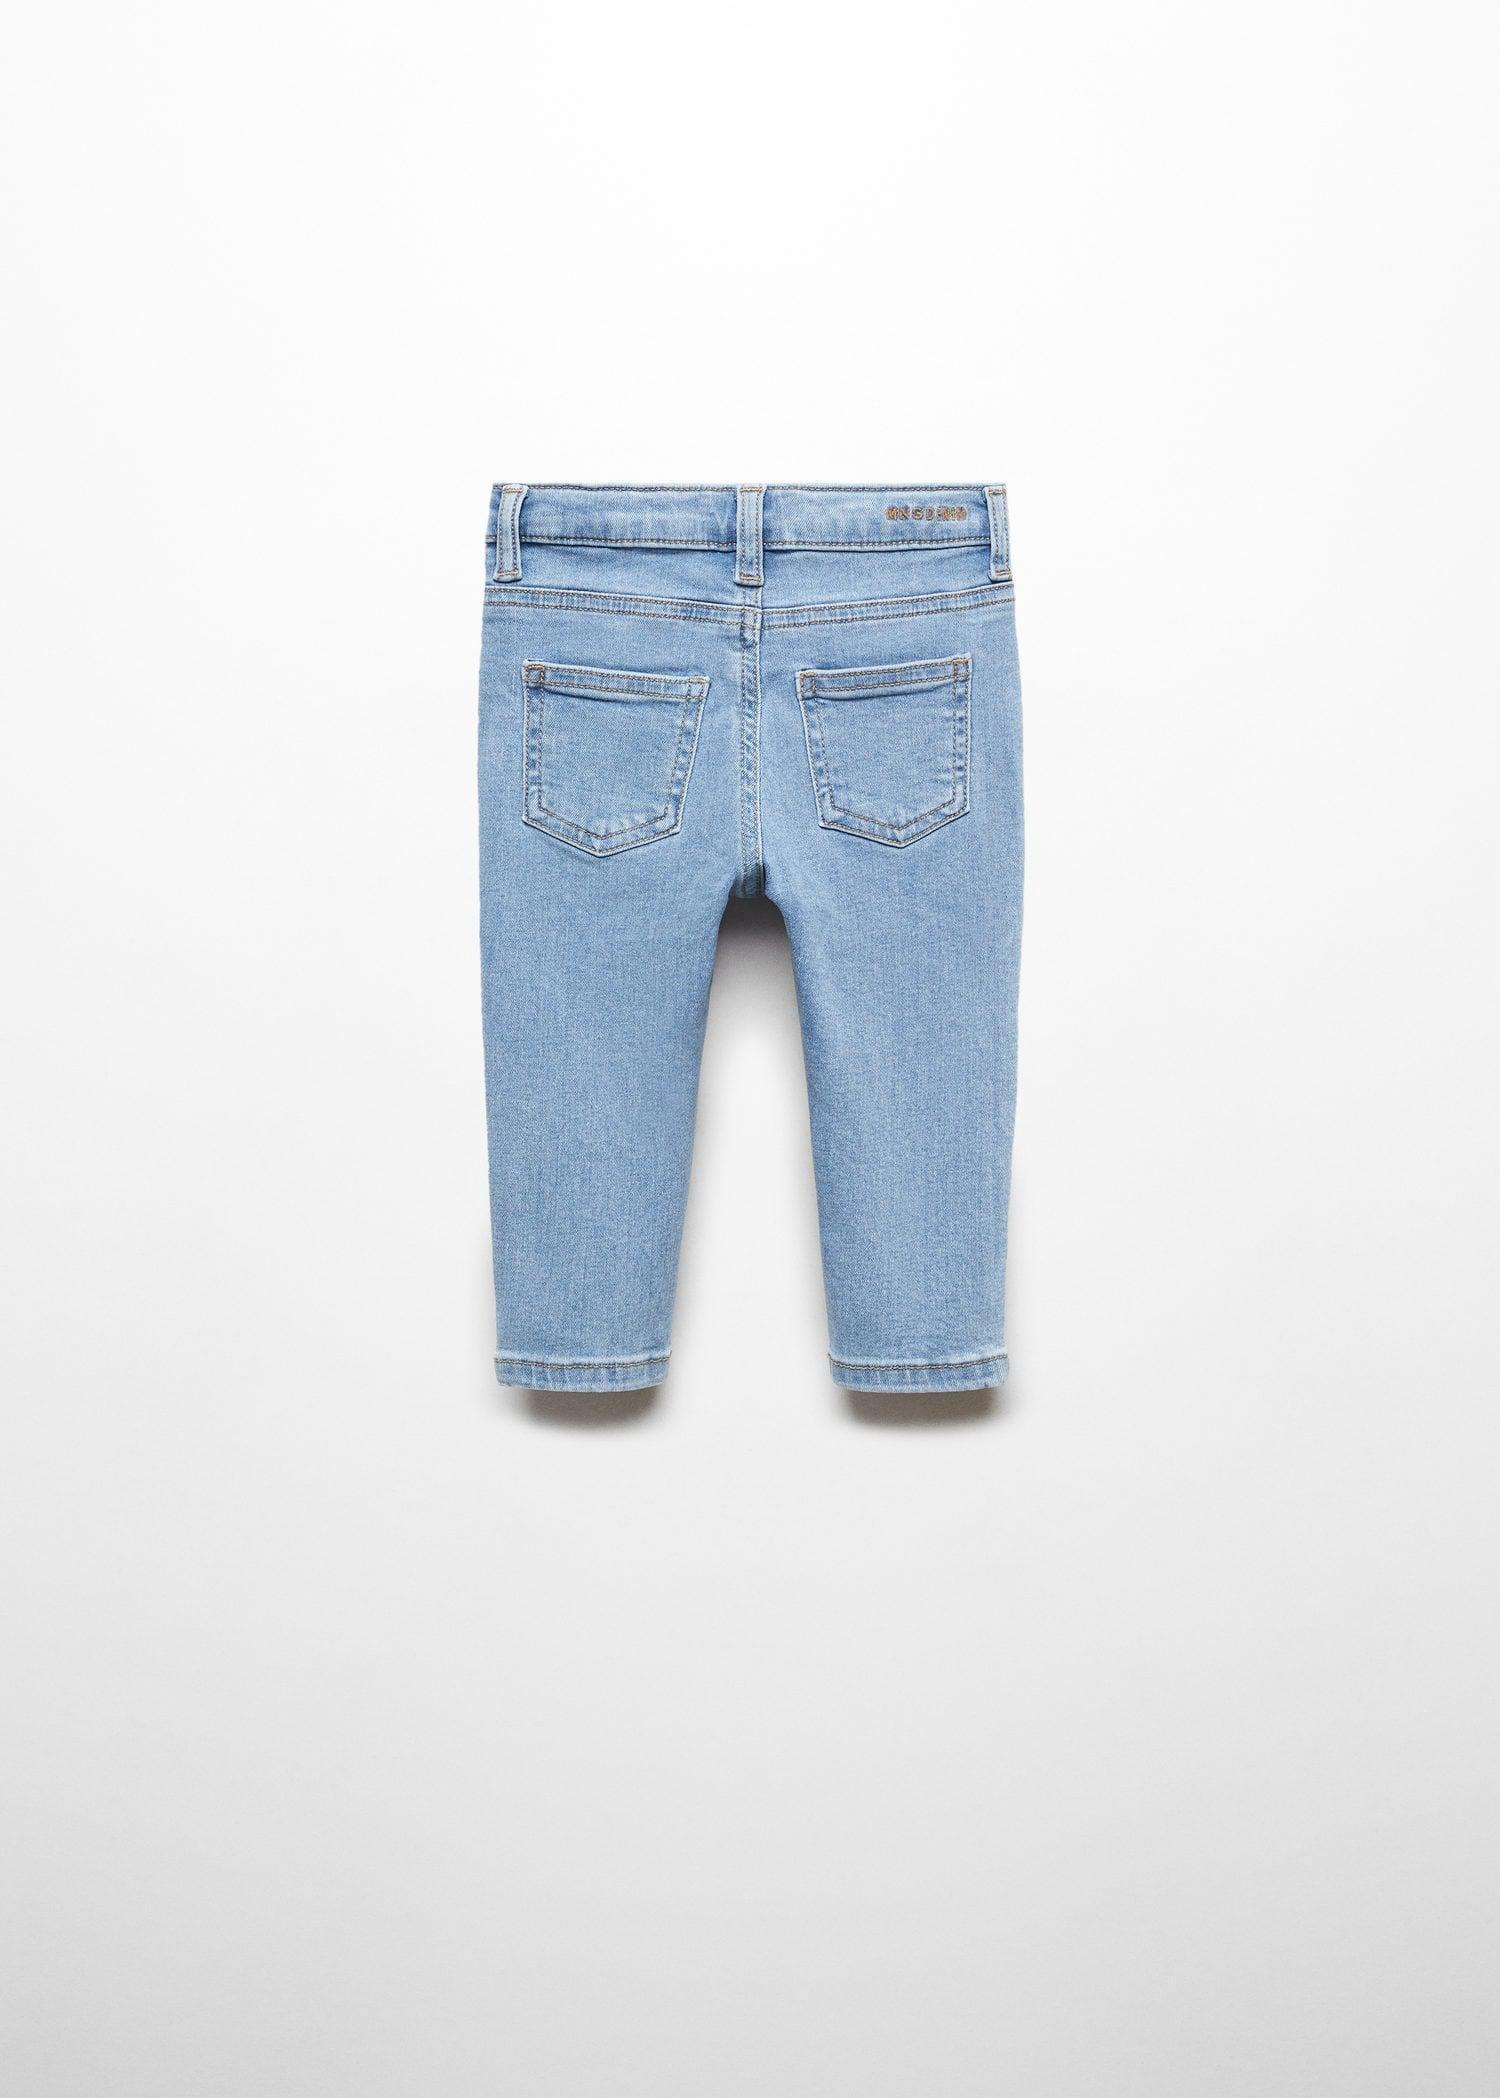 Mango - Blue Cotton Skinny Jeans, Kids Boys